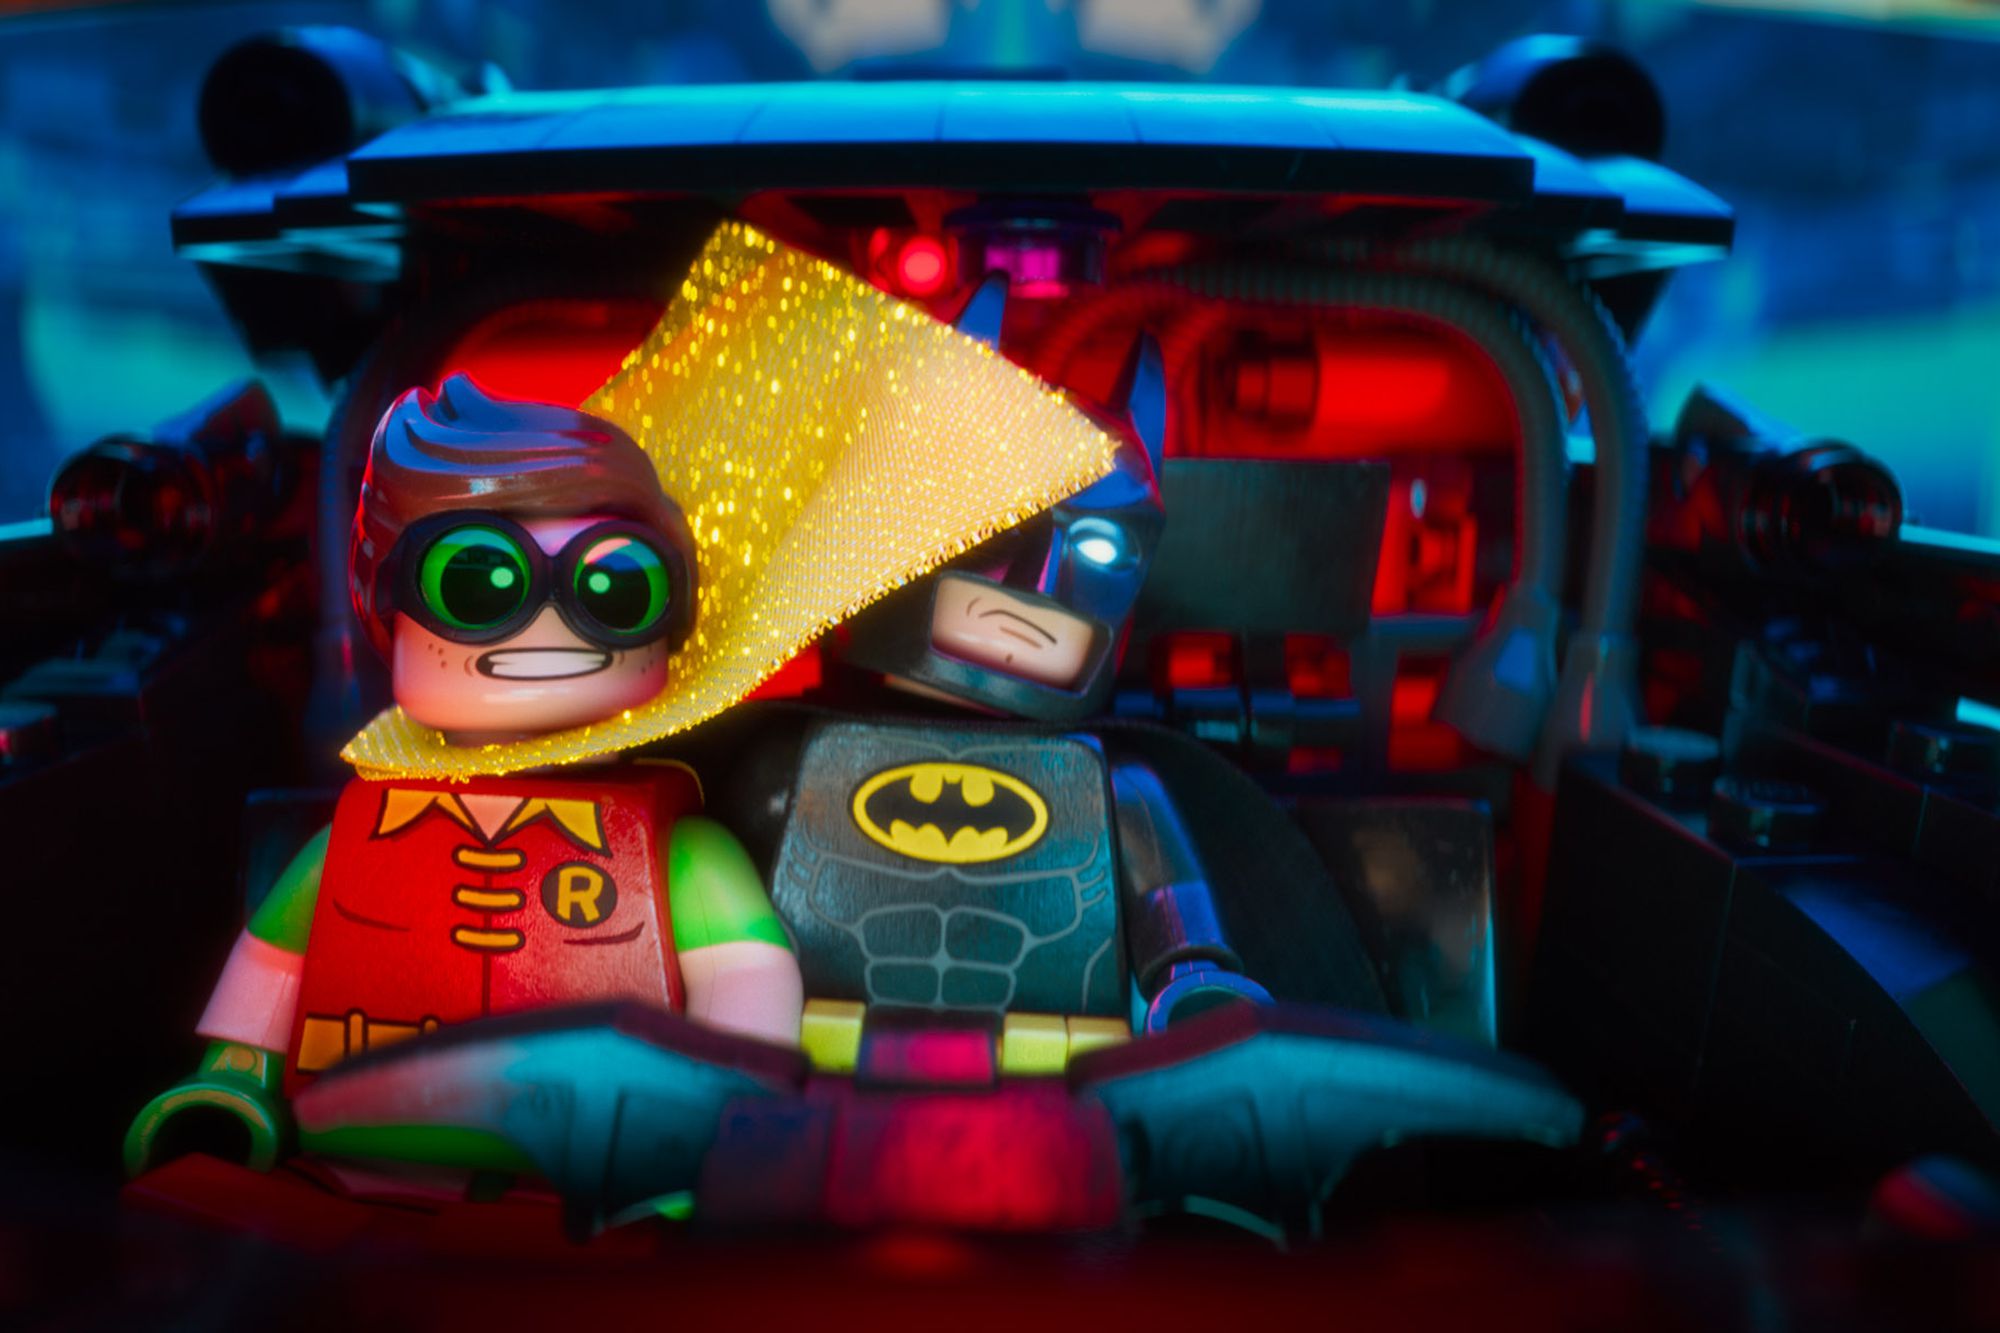 Question Club: The Lego Batman Movie's original content, smart